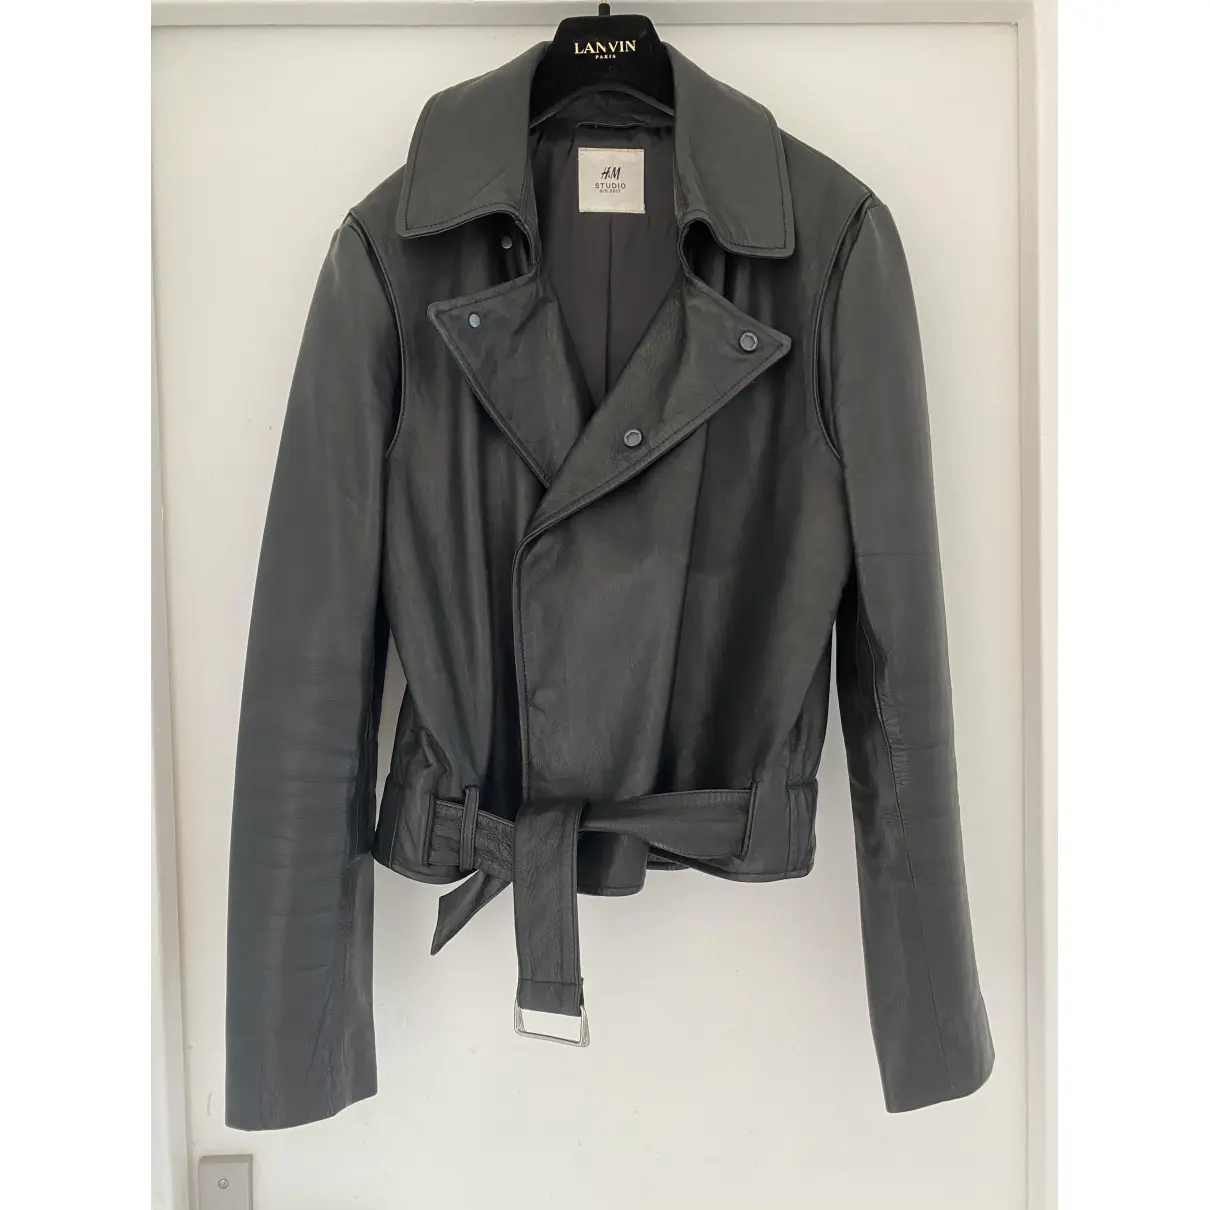 Buy H&M Studio Leather vest online